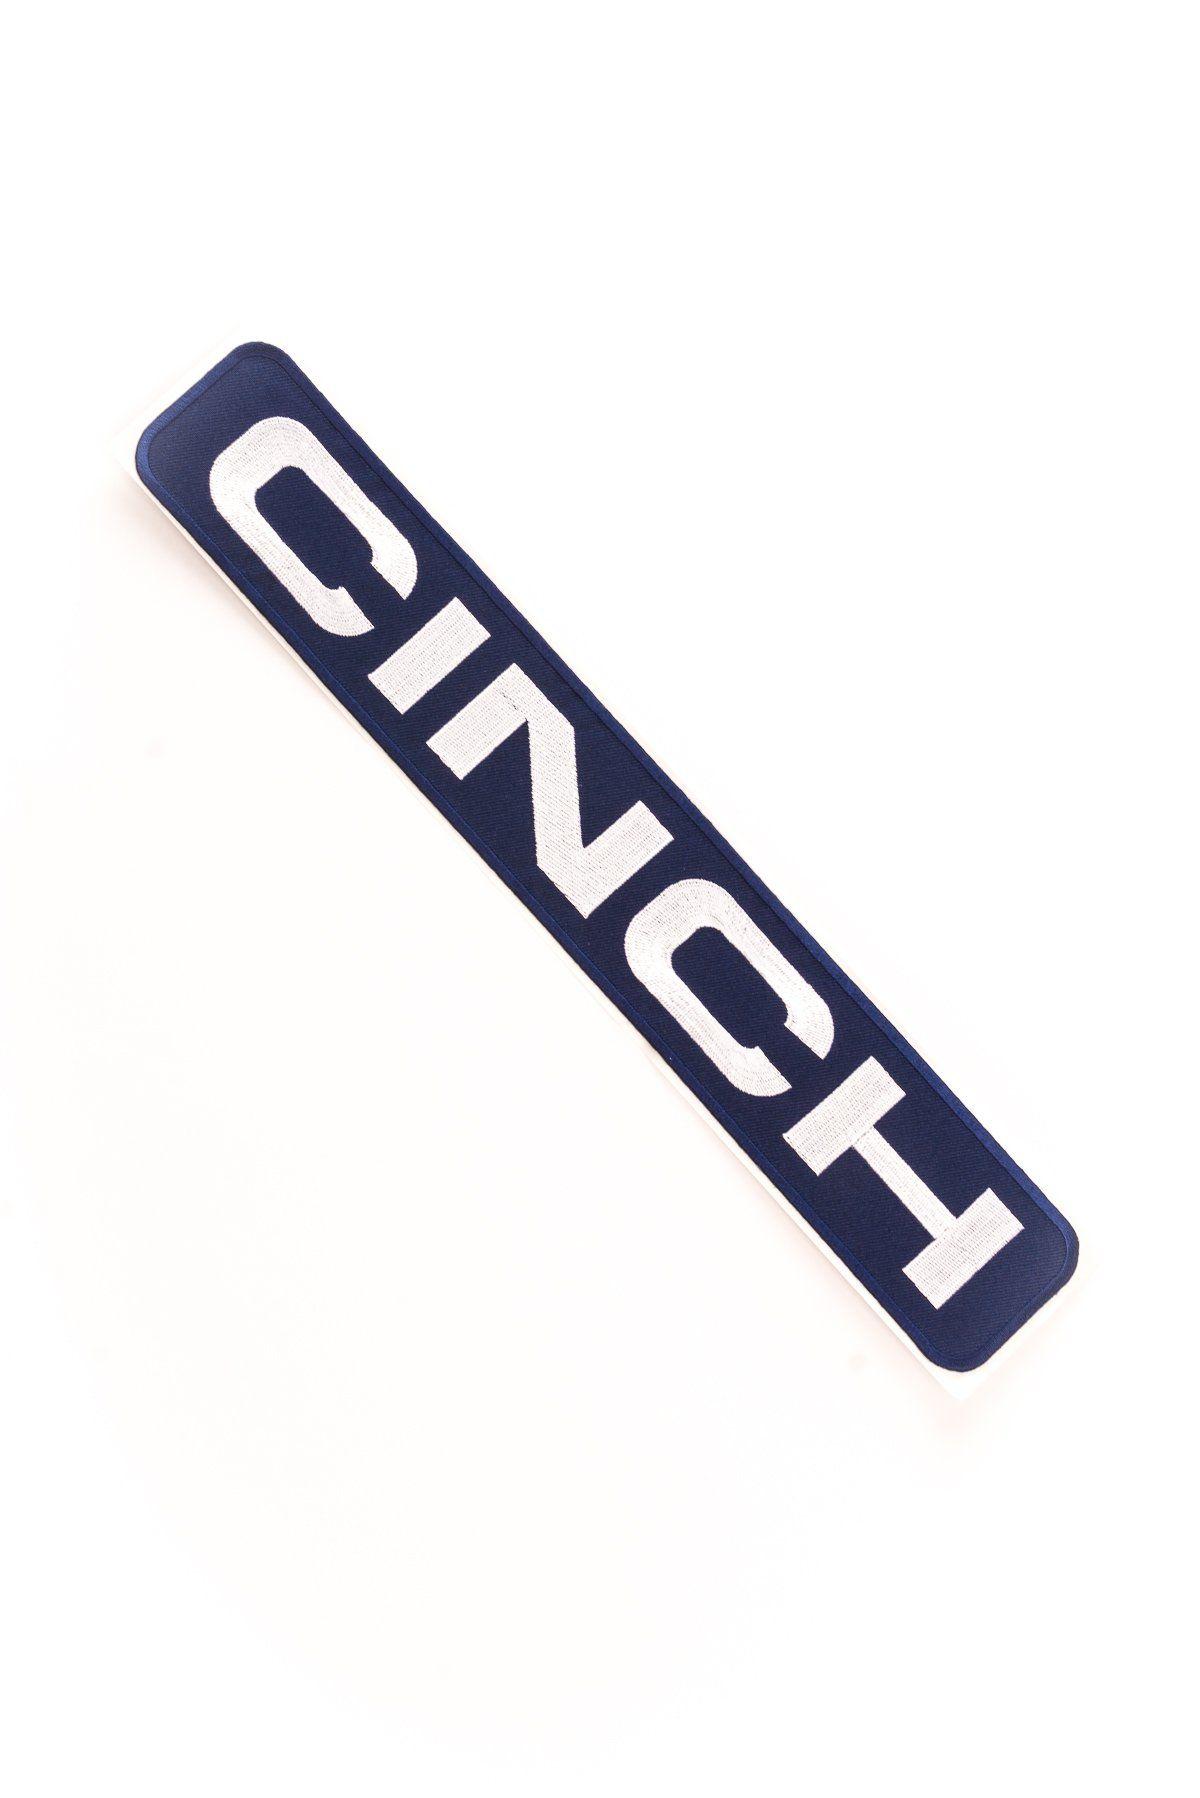 Cinch Logo - CINCH Jeans. CINCH Blue Logo Patch